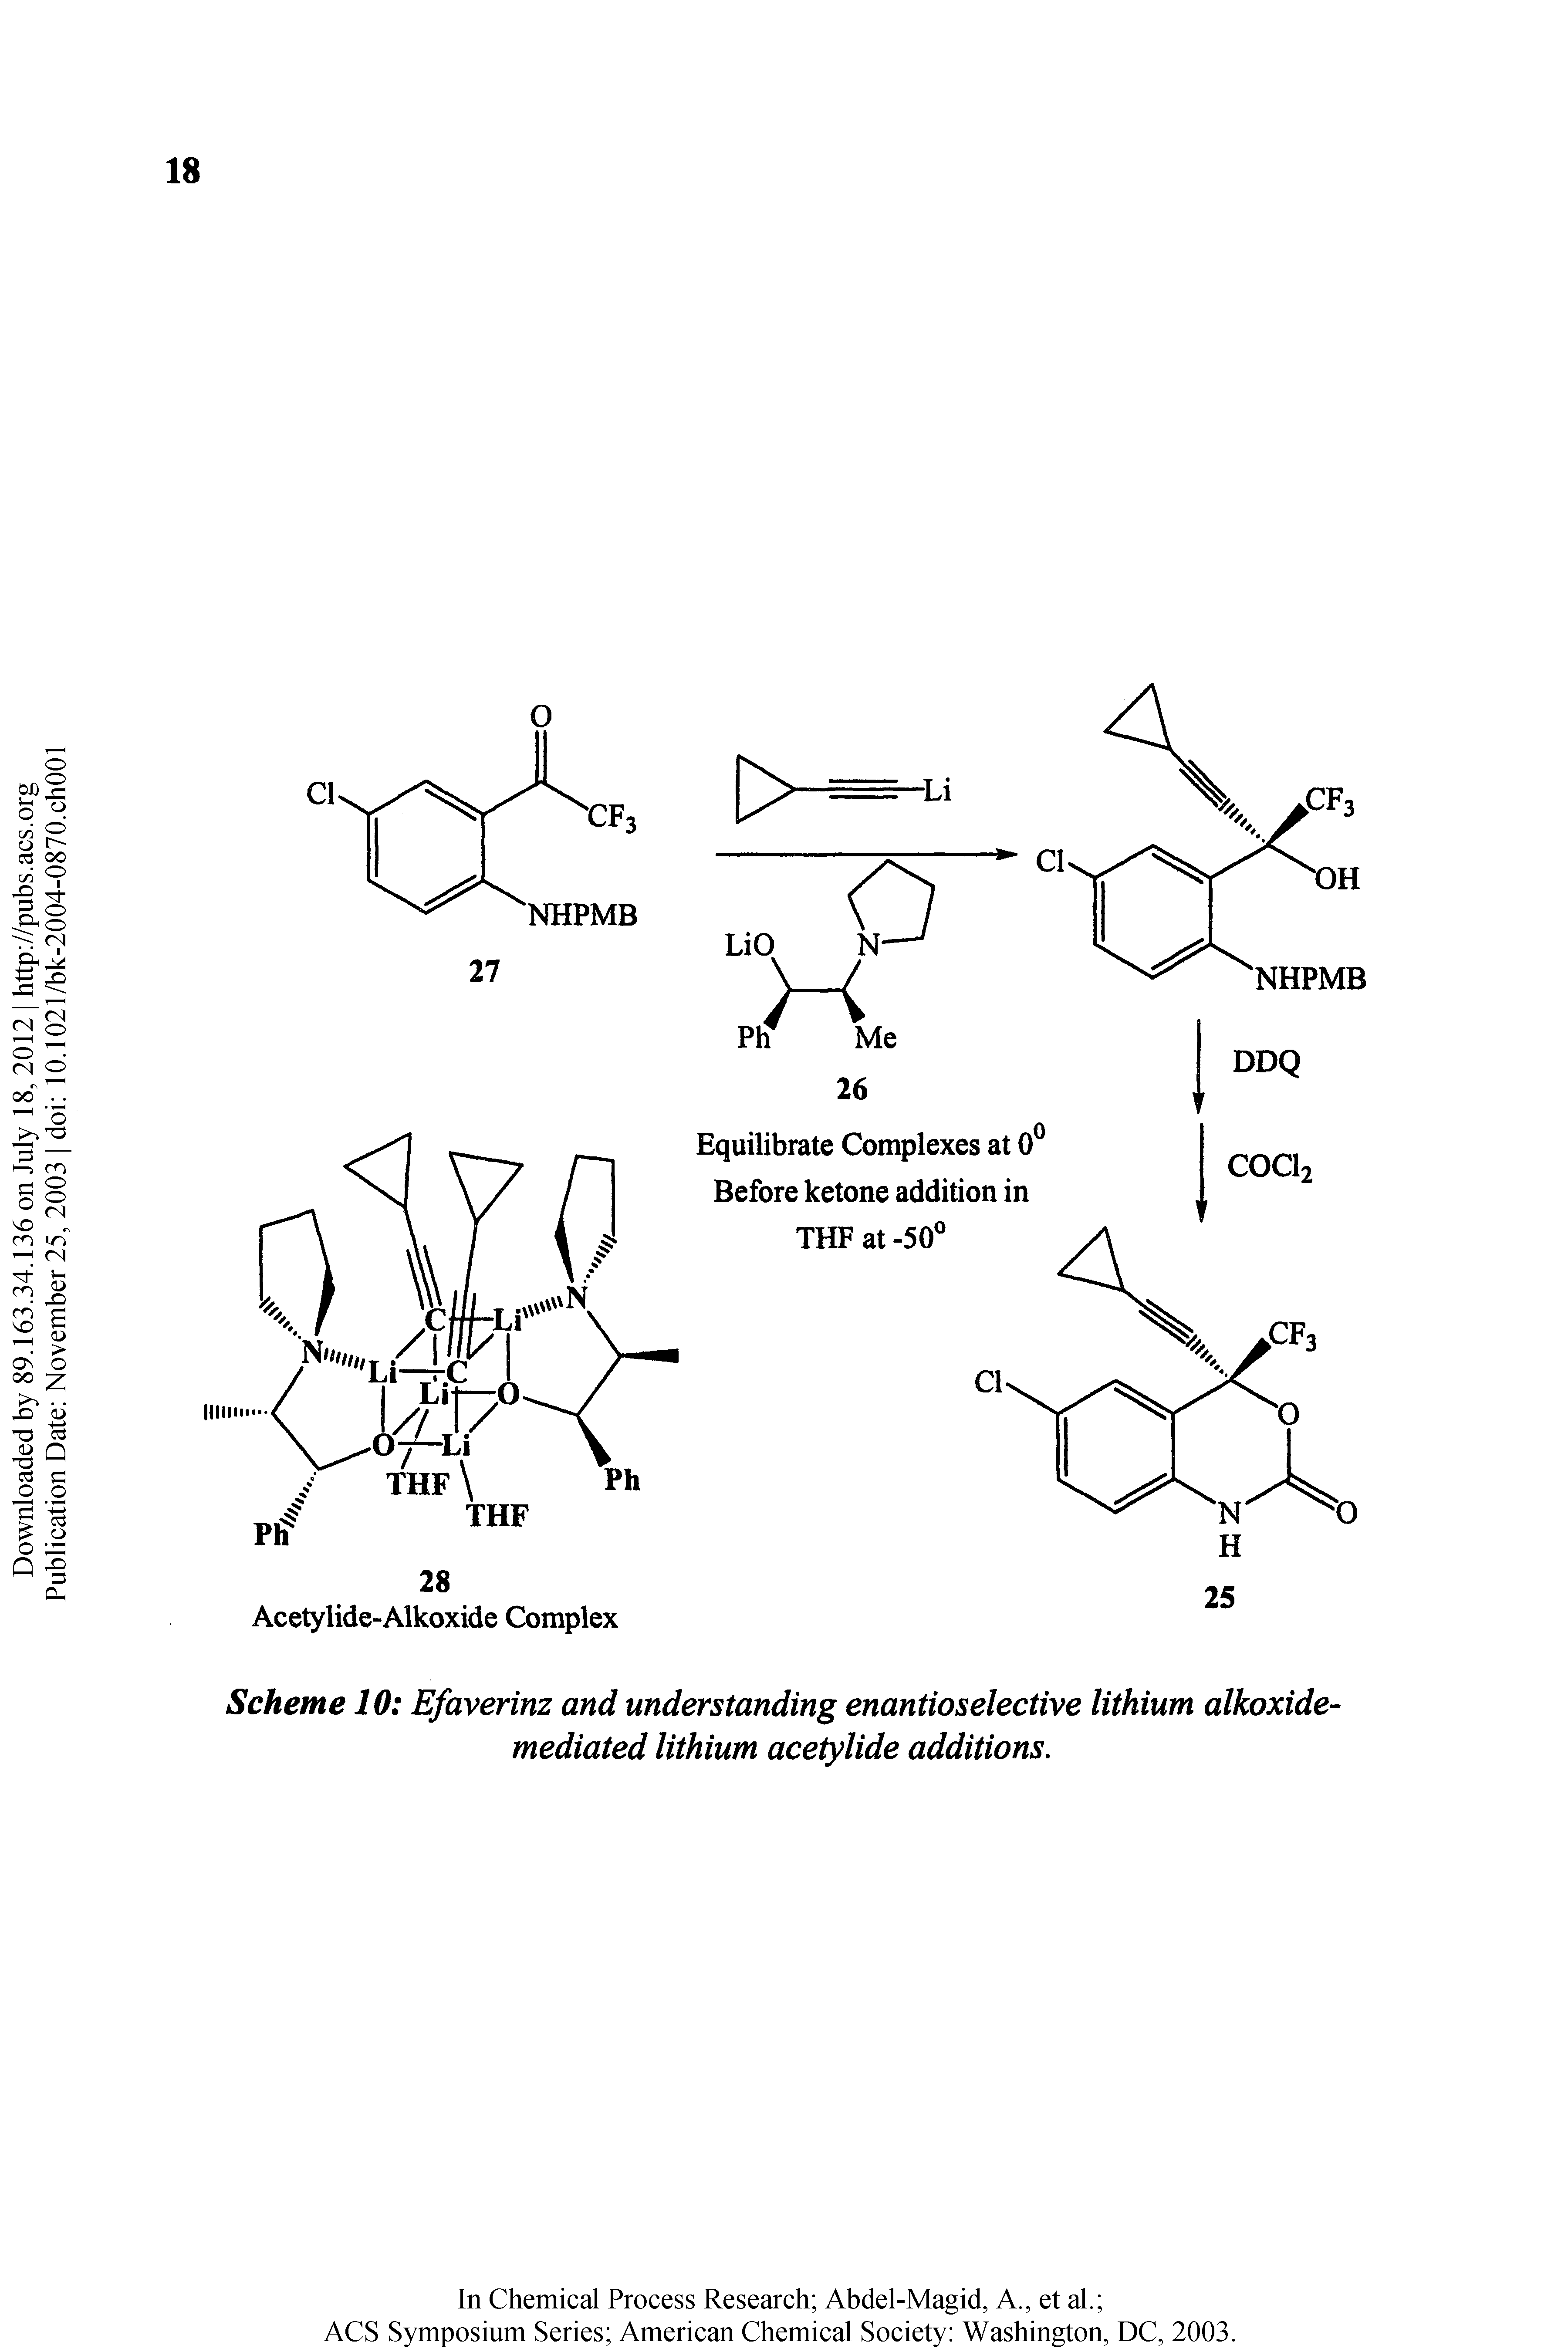 Scheme 10 Efaverinz and understanding enantioselective lithium alkoxide-mediated lithium acetylide additions.